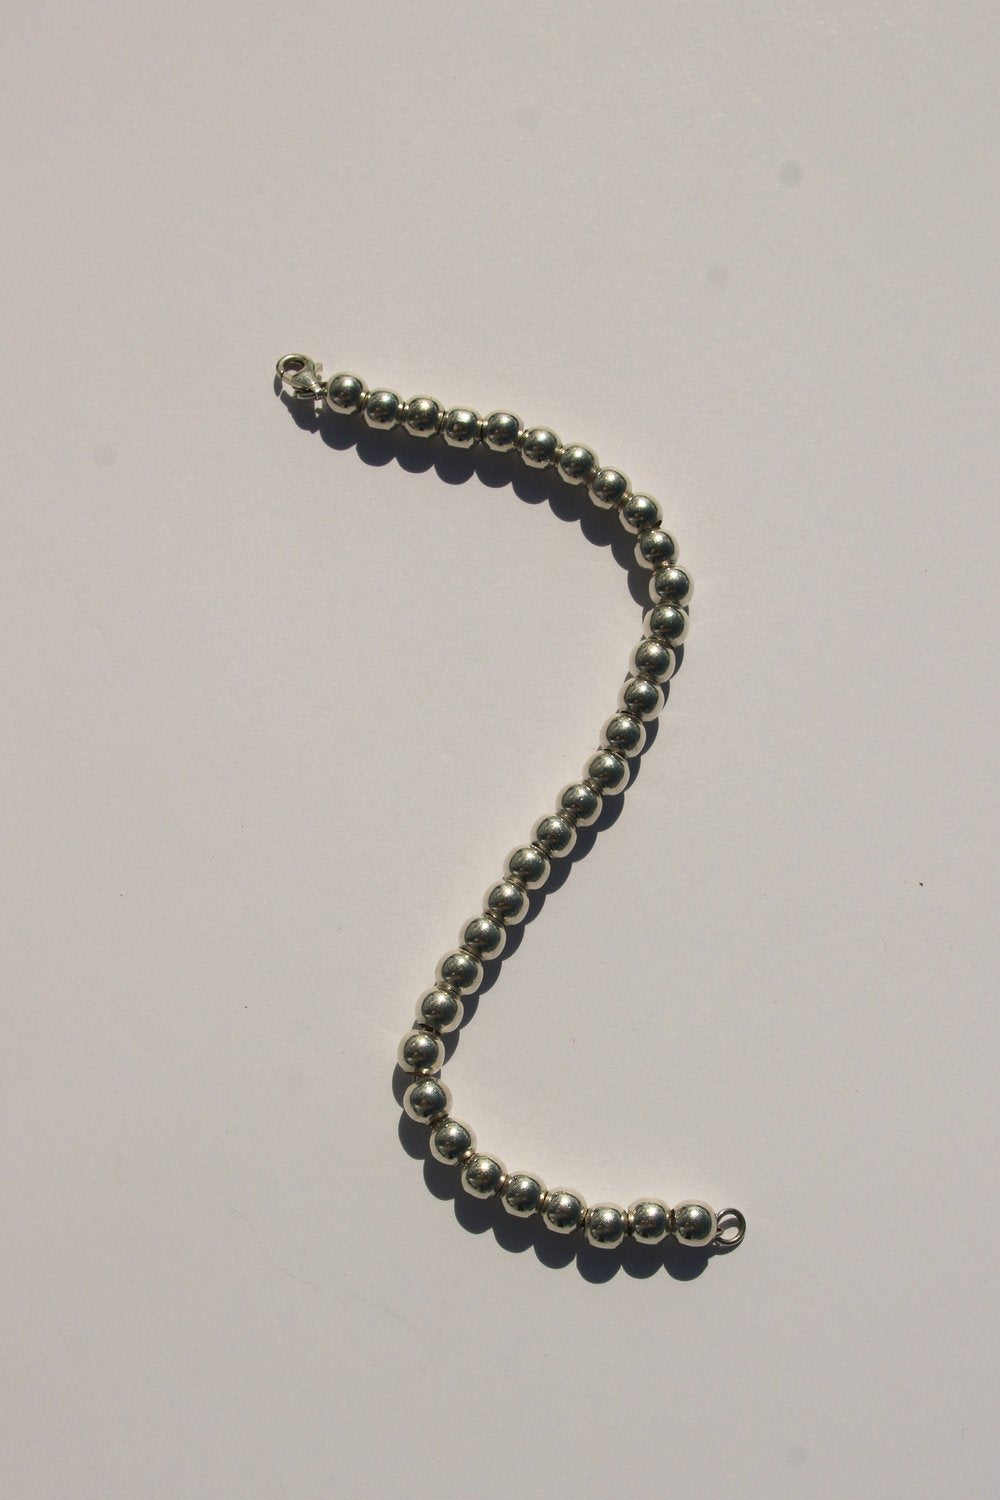 Munition Bracelet in 925 Silver